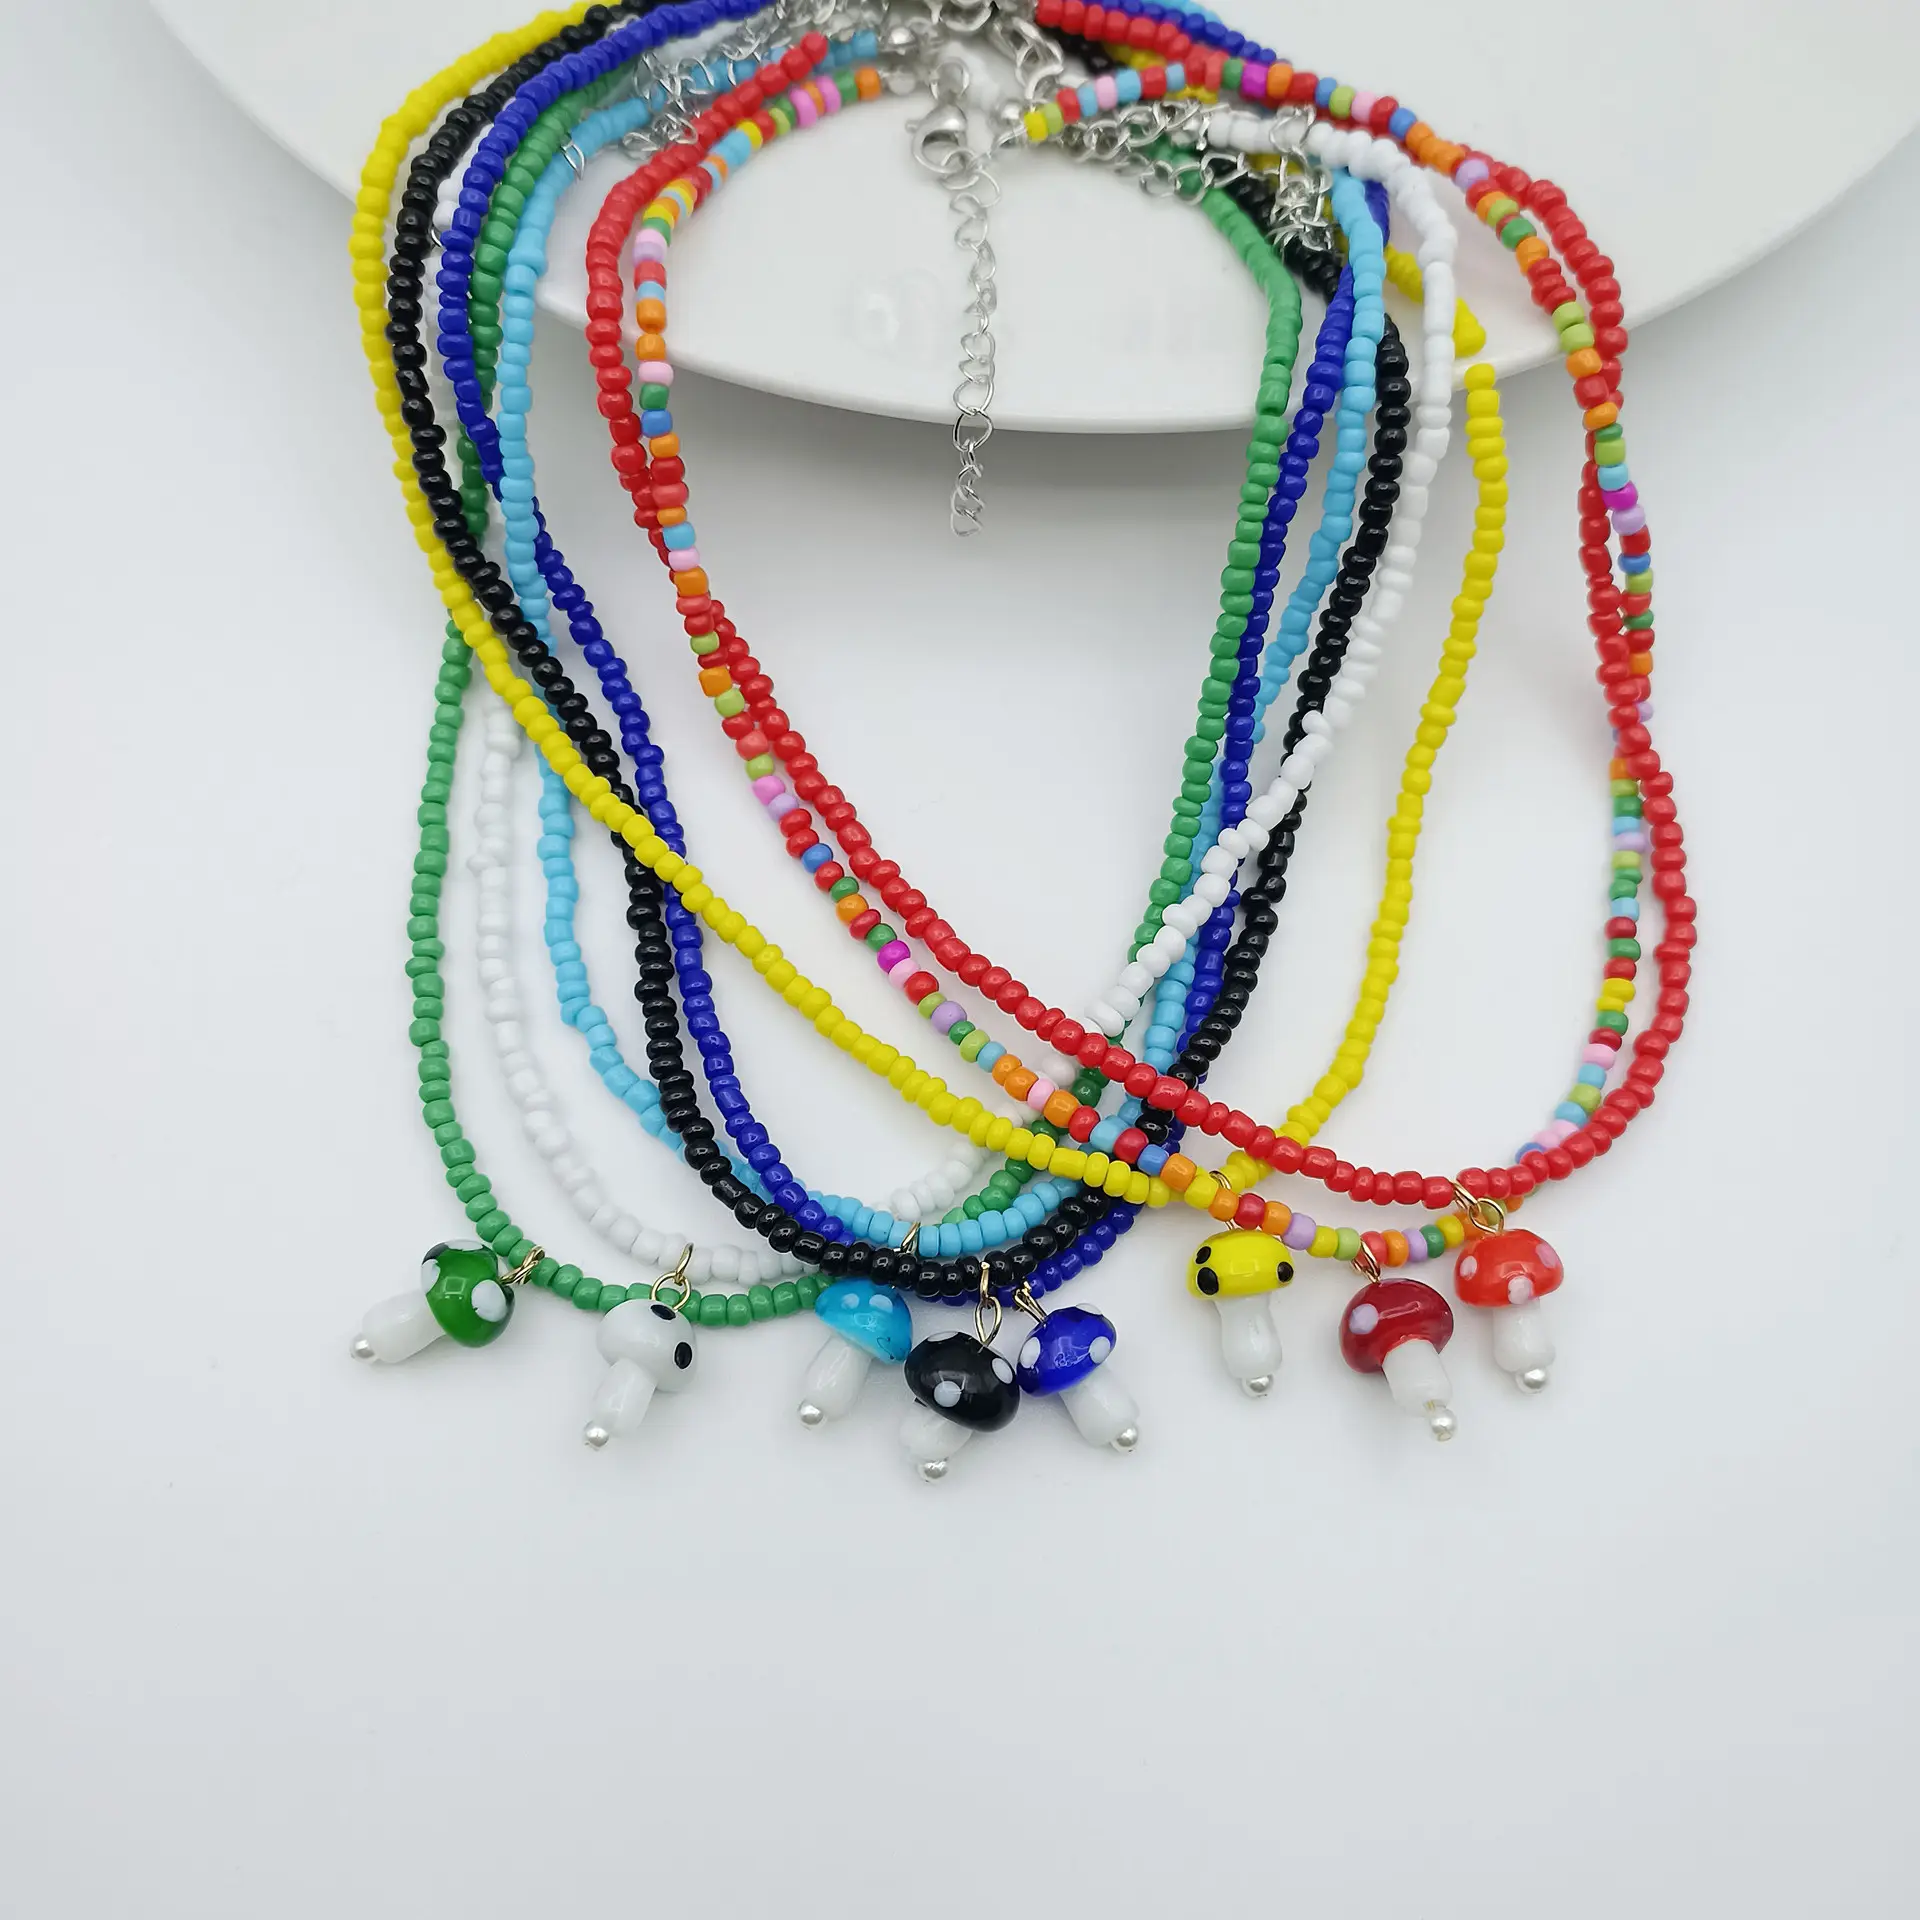 New beads creative handmade rice cute mushroom pendant necklace women's jewelry necklace